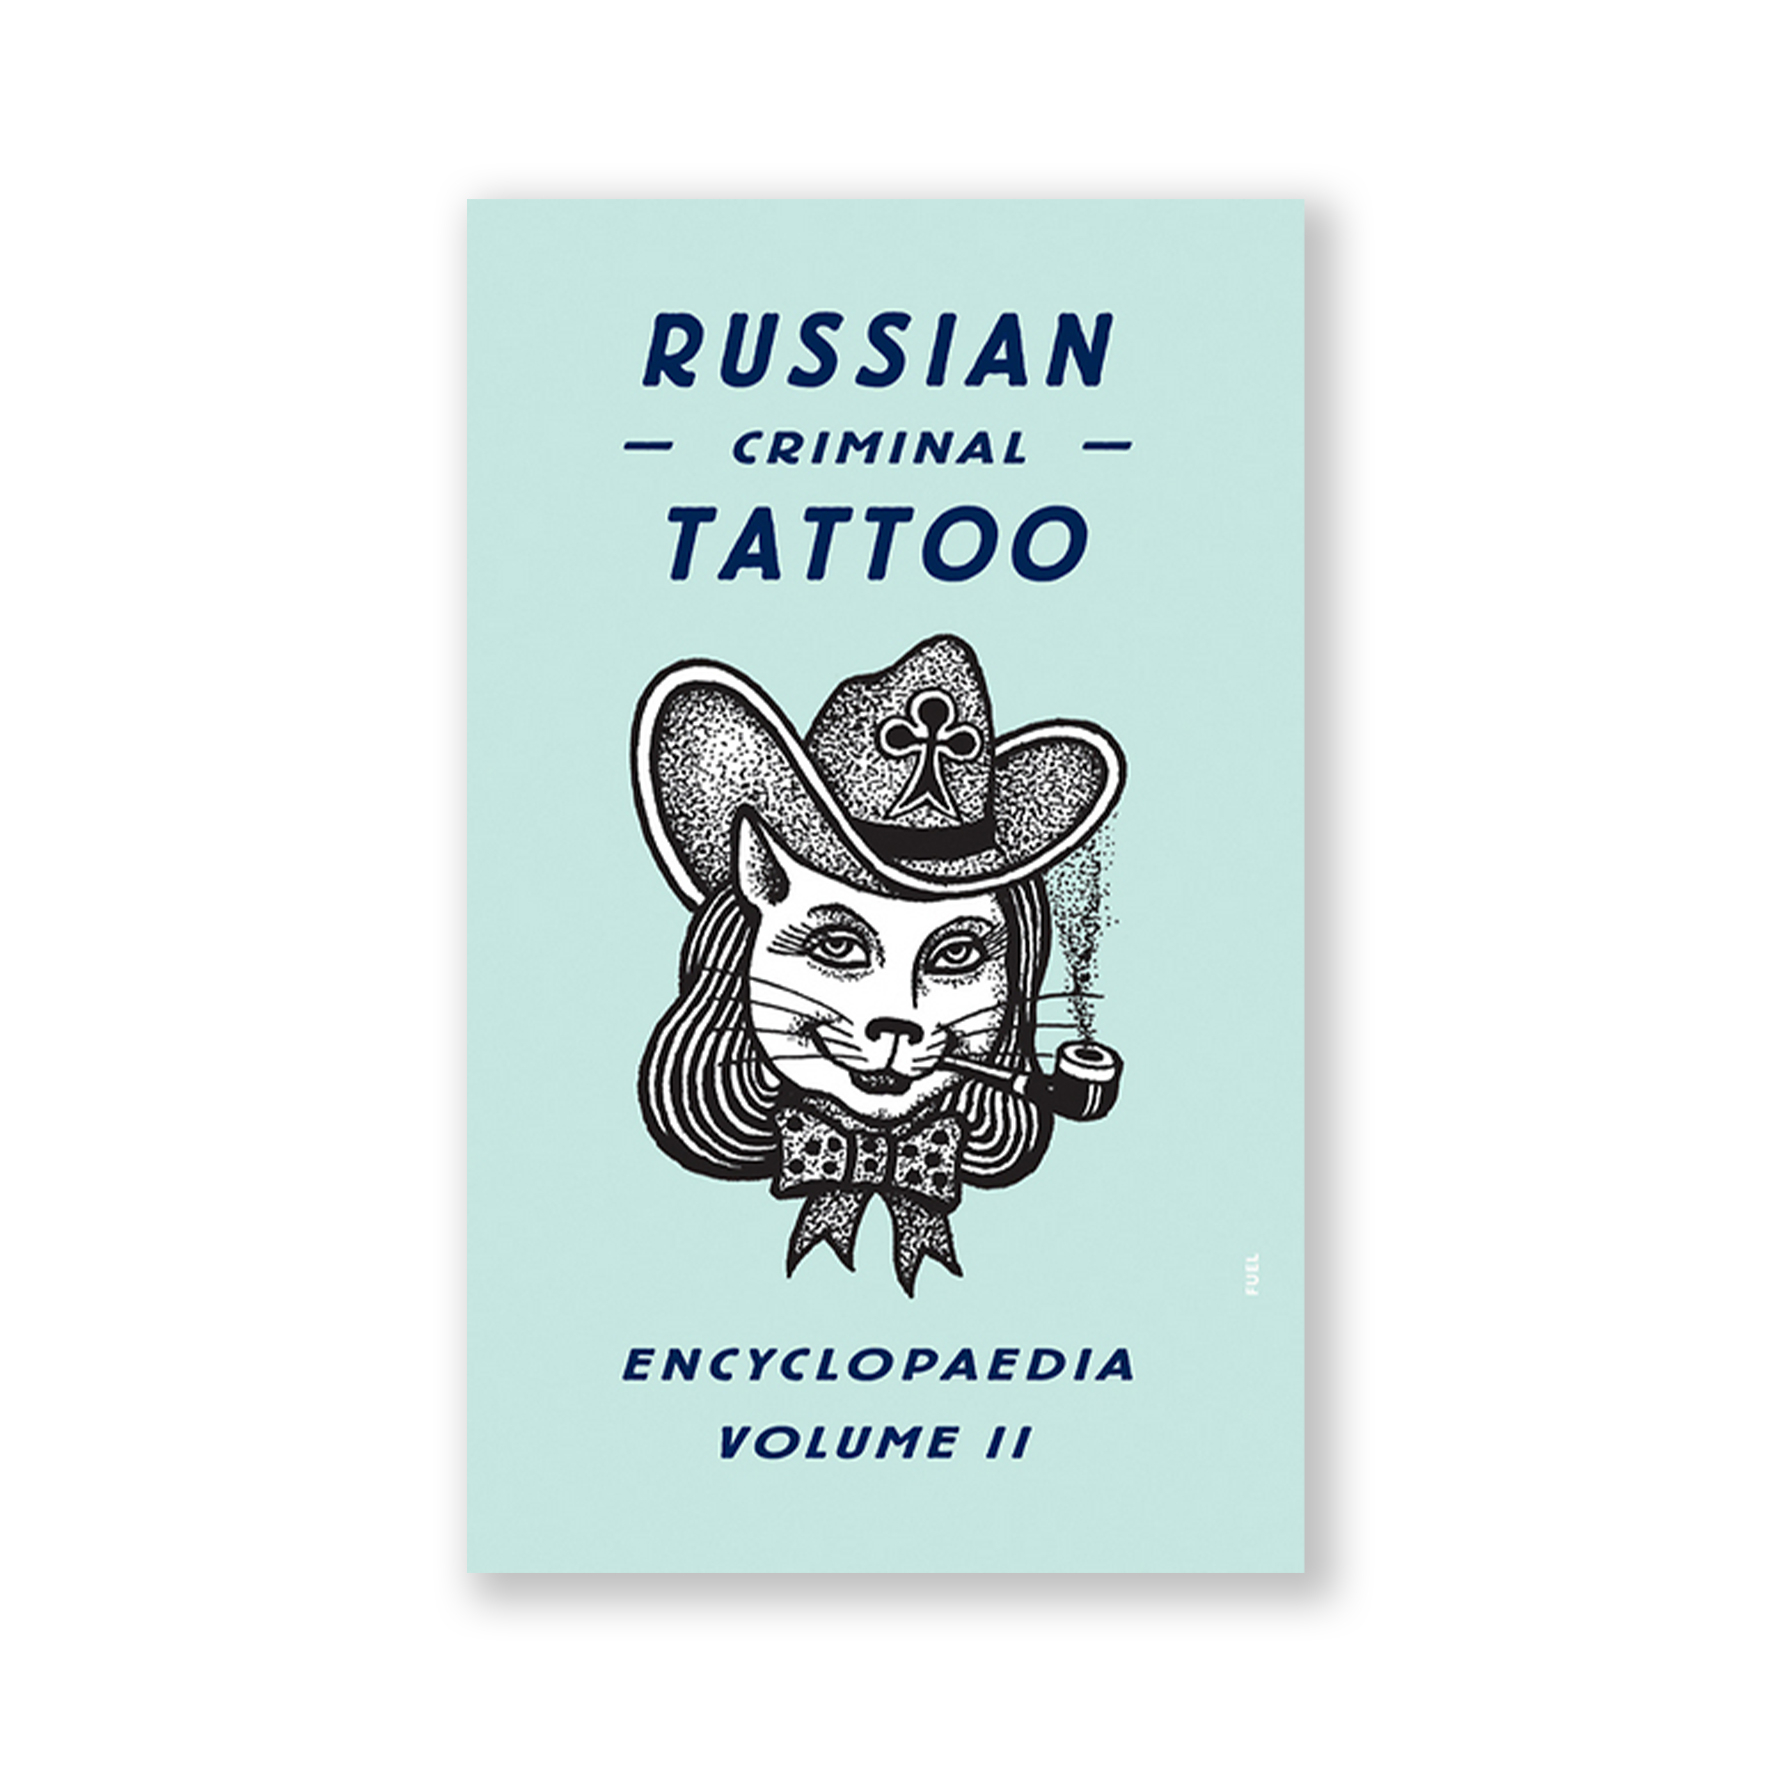 Russian Criminal Tattoo Encyclopaedia Volume II